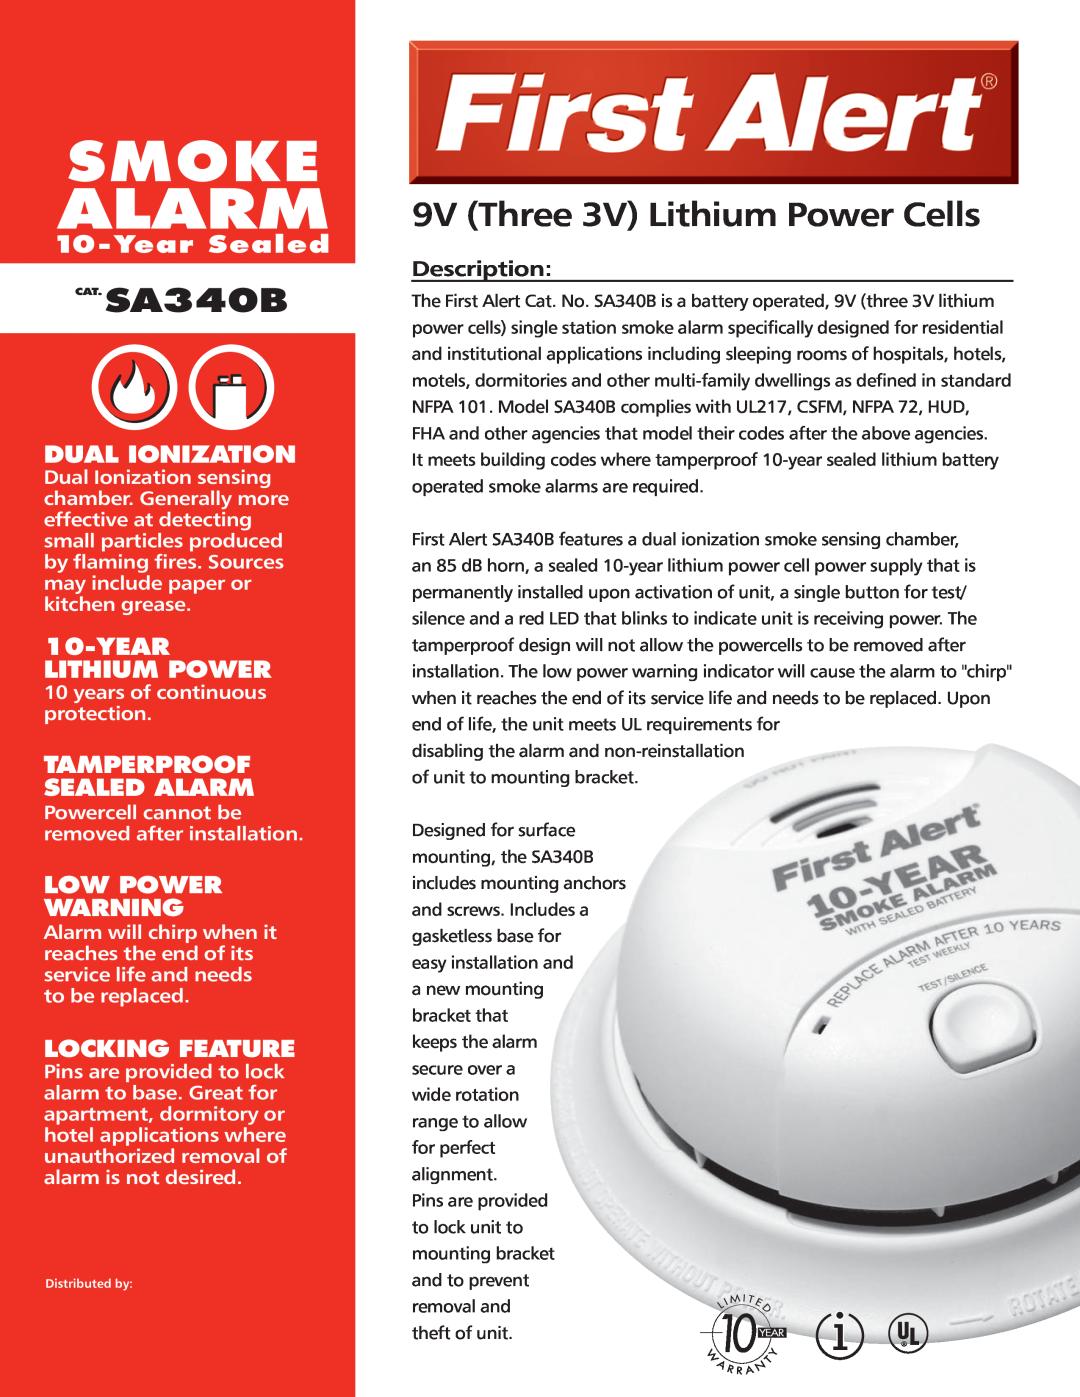 BRK electronic manual 9V Three 3V Lithium Power Cells, Smoke Alarm, CAT. SA340B, Year Sealed, Dual Ionization 